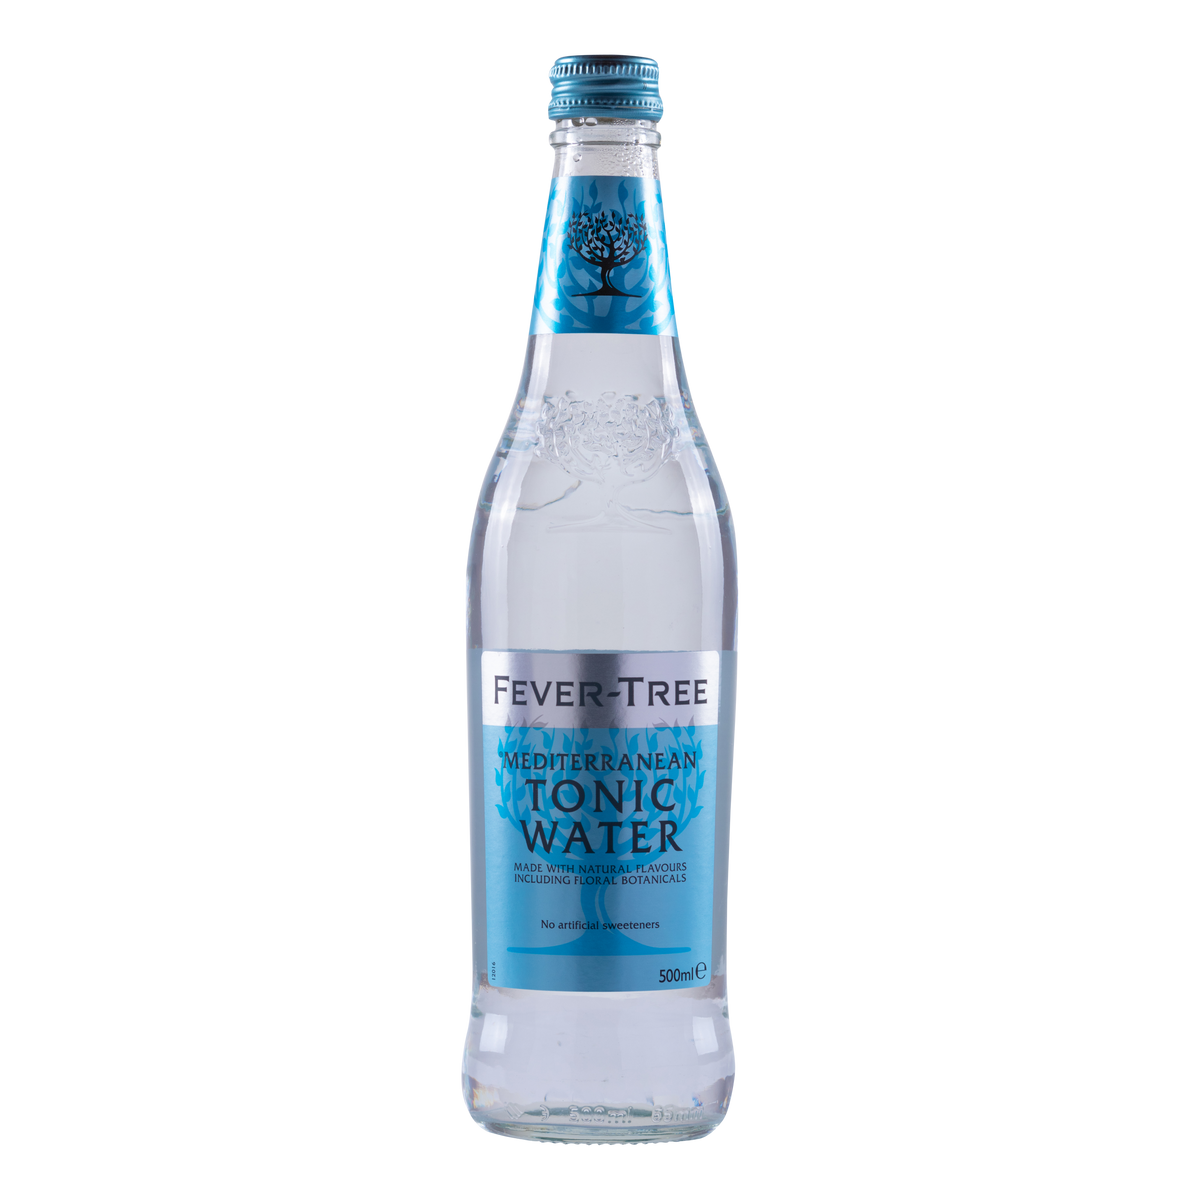 Egmonts Garden Fever-Tree Mediterranean tonic water large bottle mediterraans grote fles